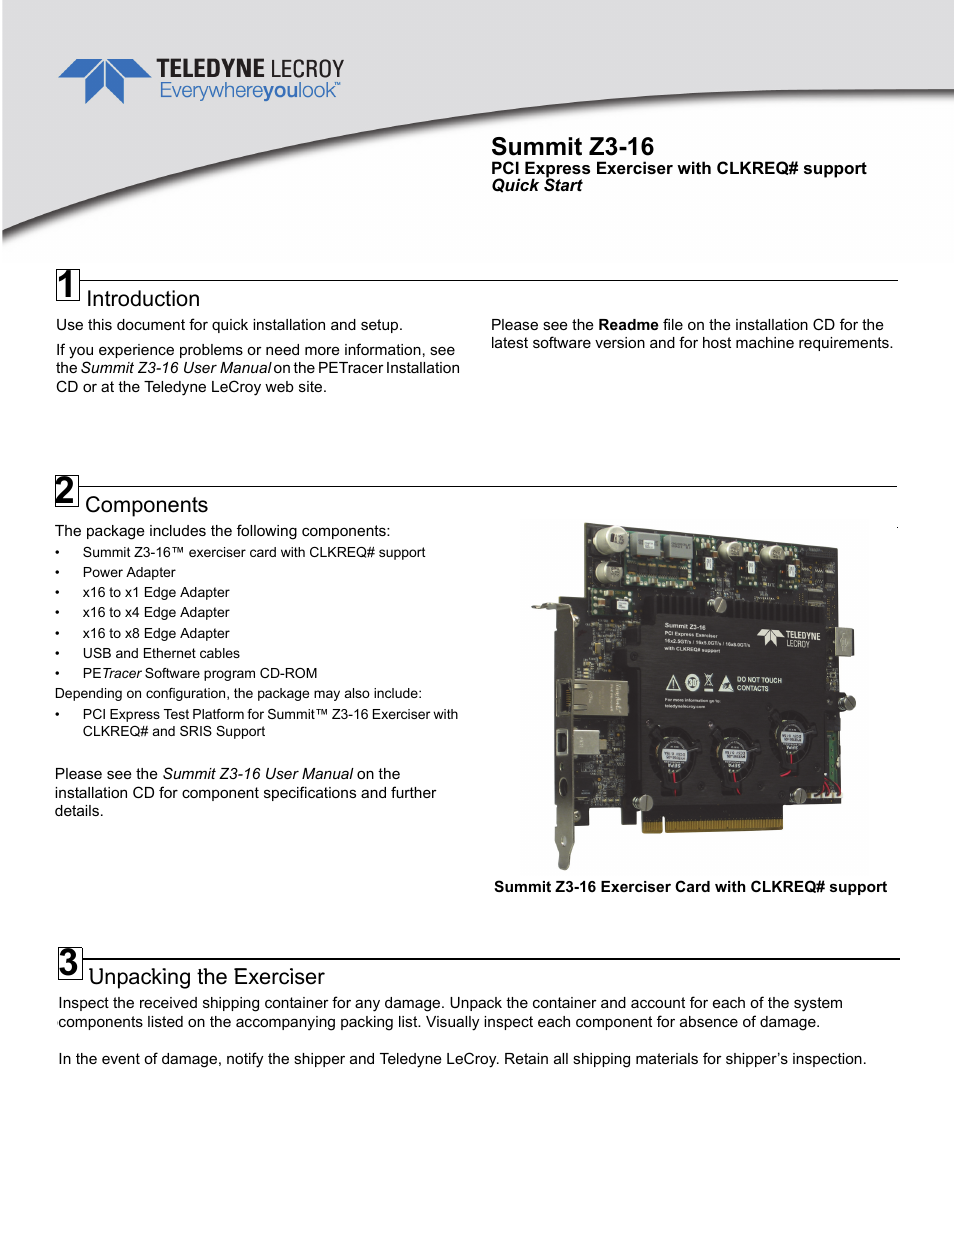 PCIe Summit Z3-16 with CLKREQ Quick Start